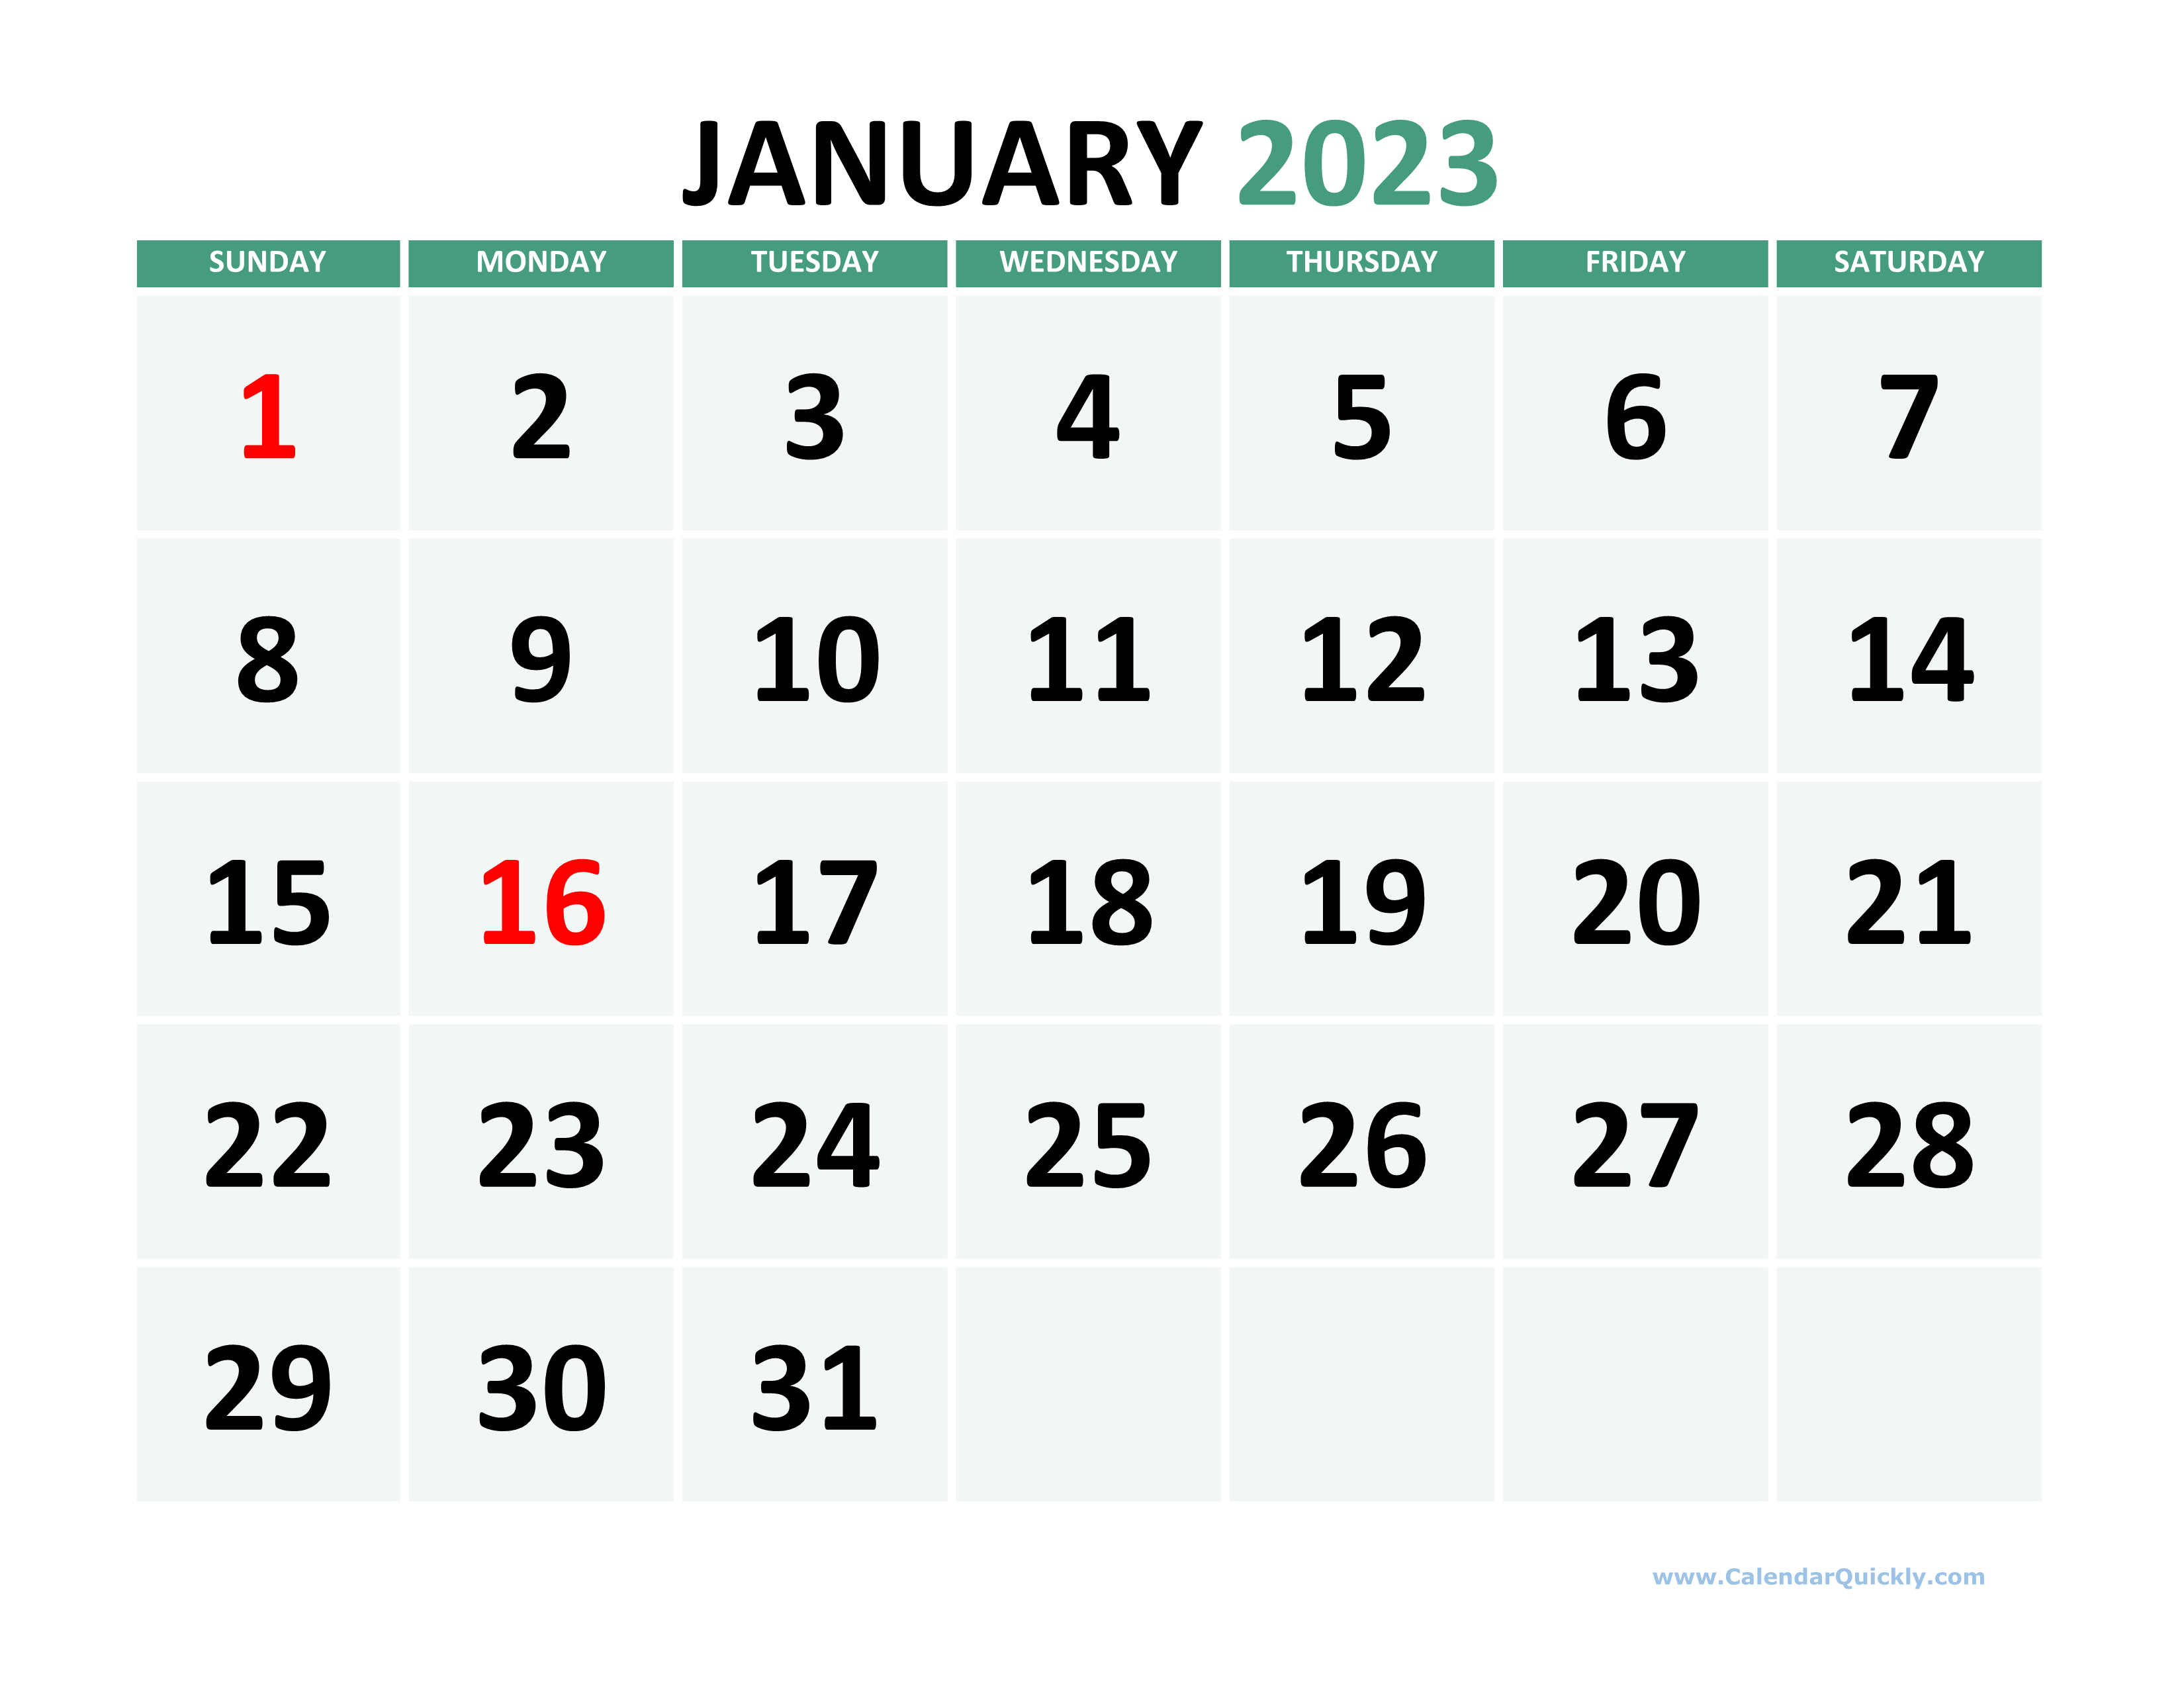 2023-monthly-calendar-template